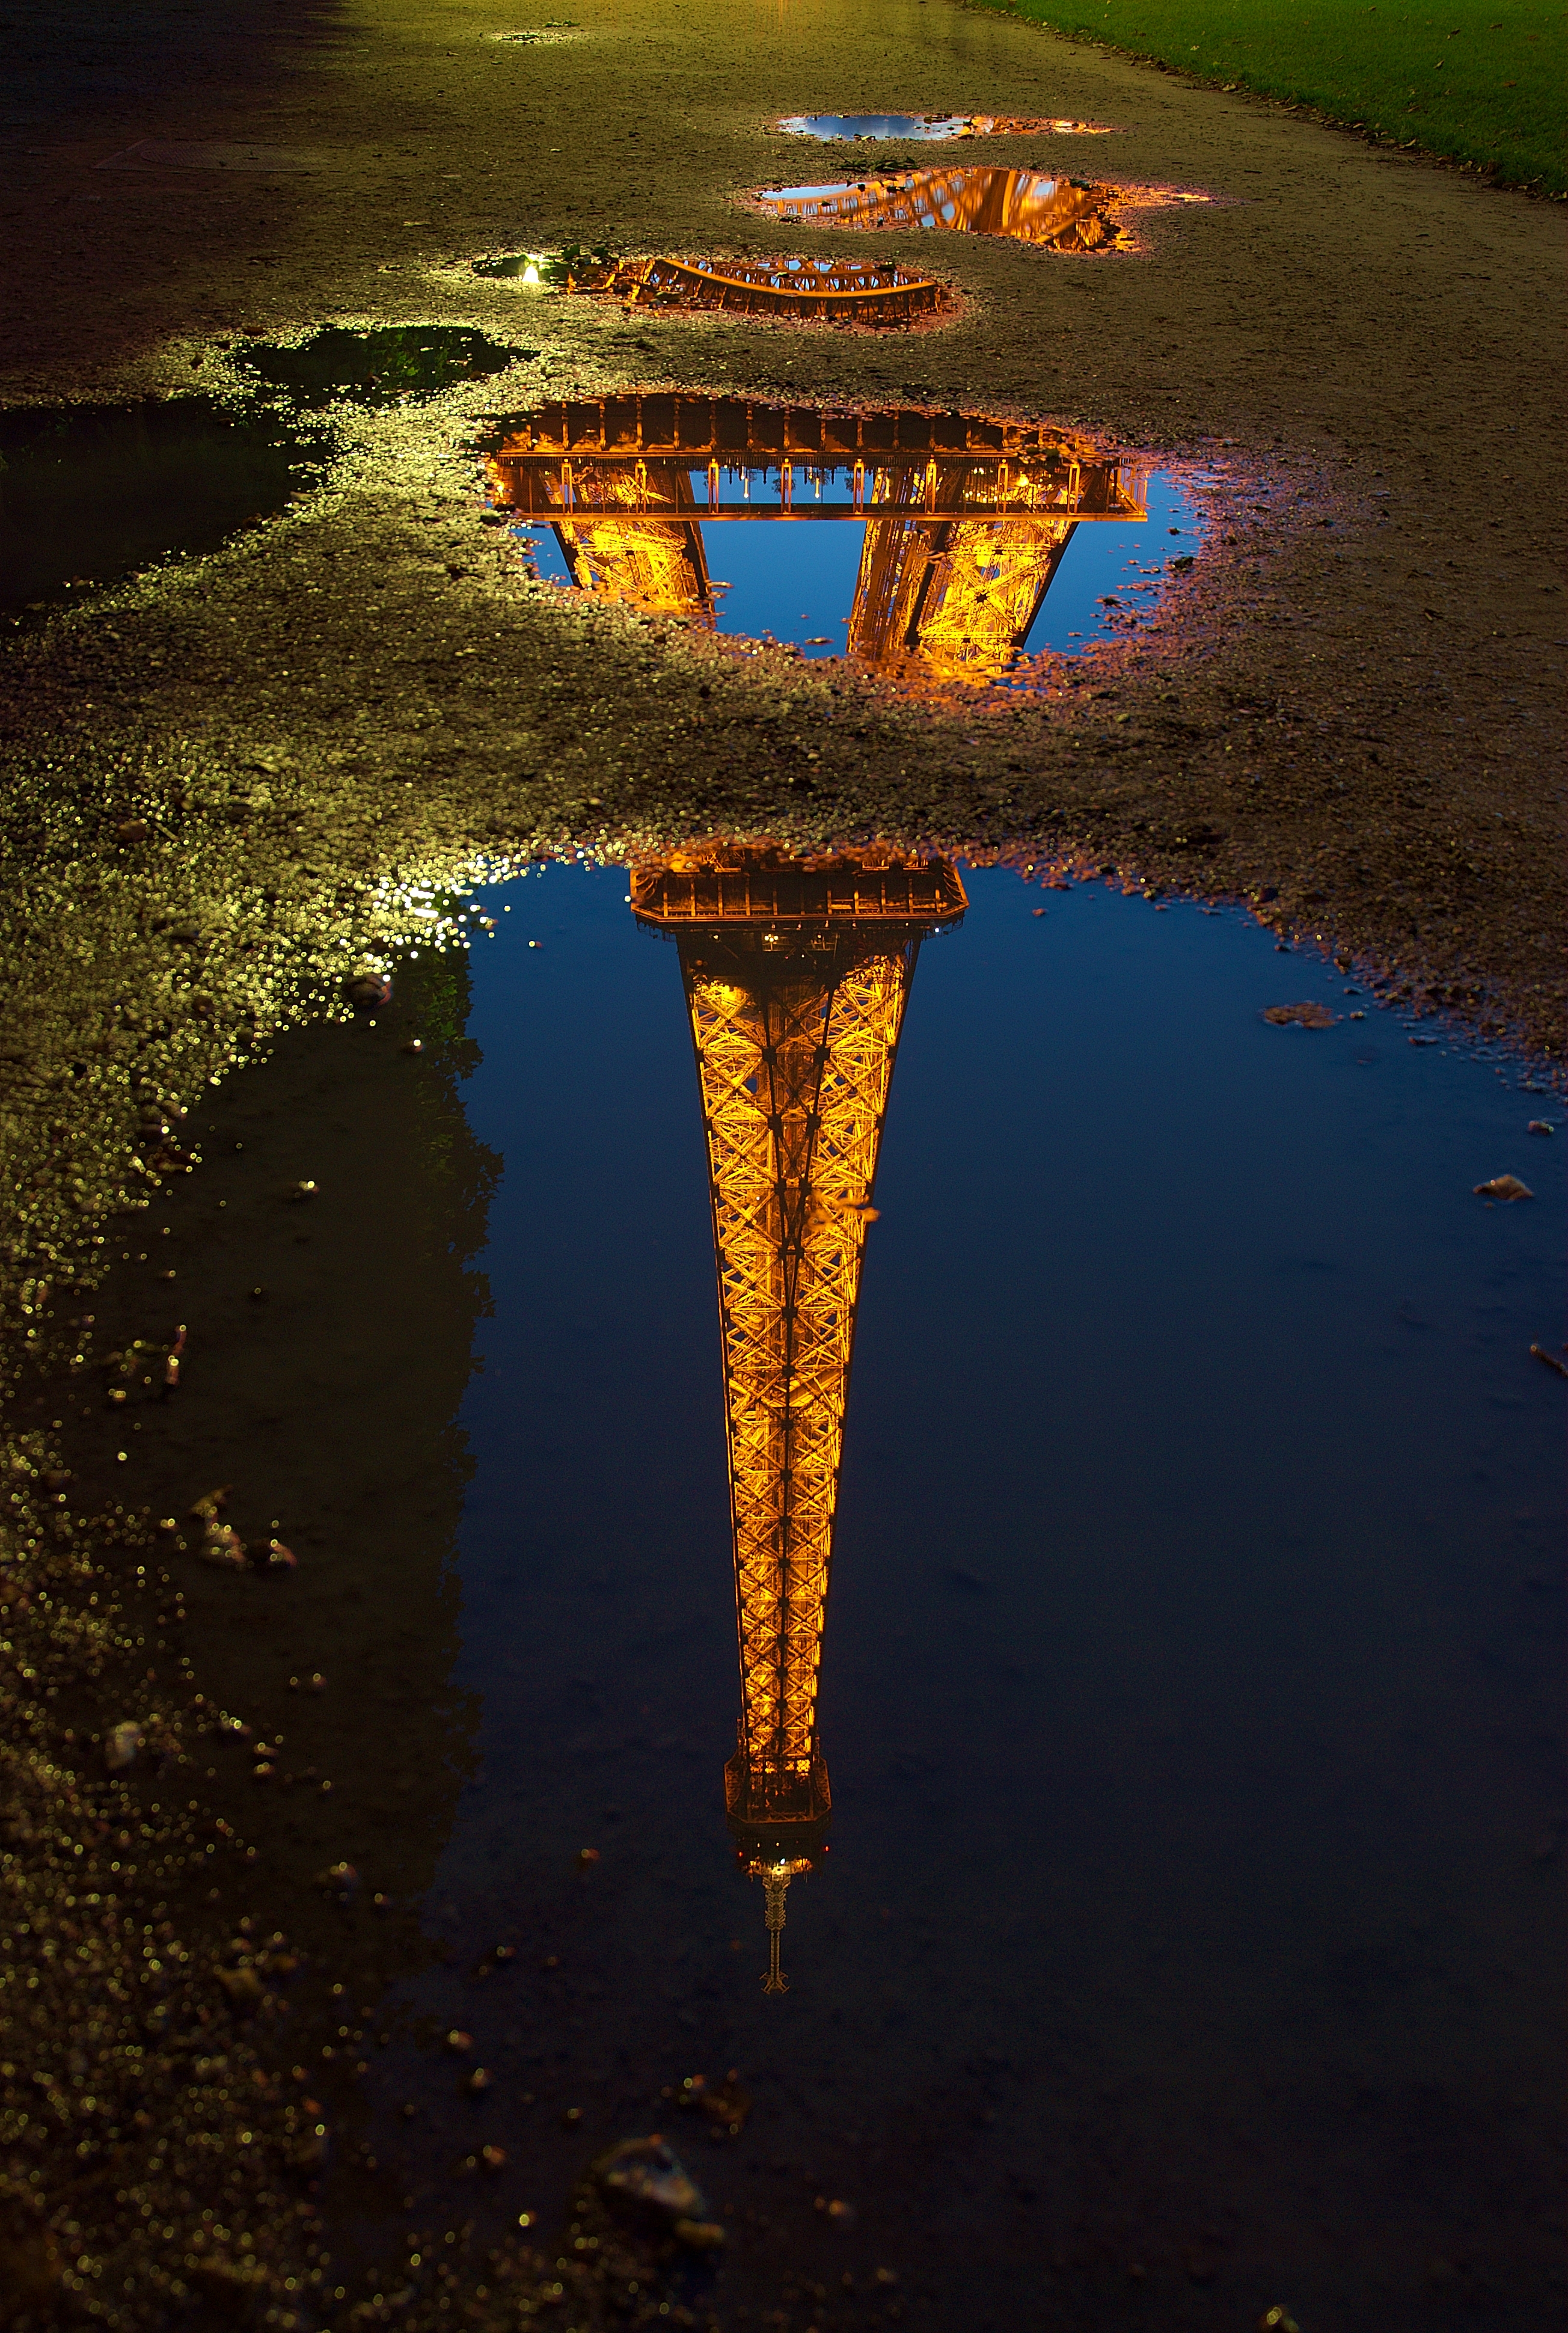 File:Reflet-tour-Eiffel-Paris-Luc-Viatour.jpg - Wikimedia Commons